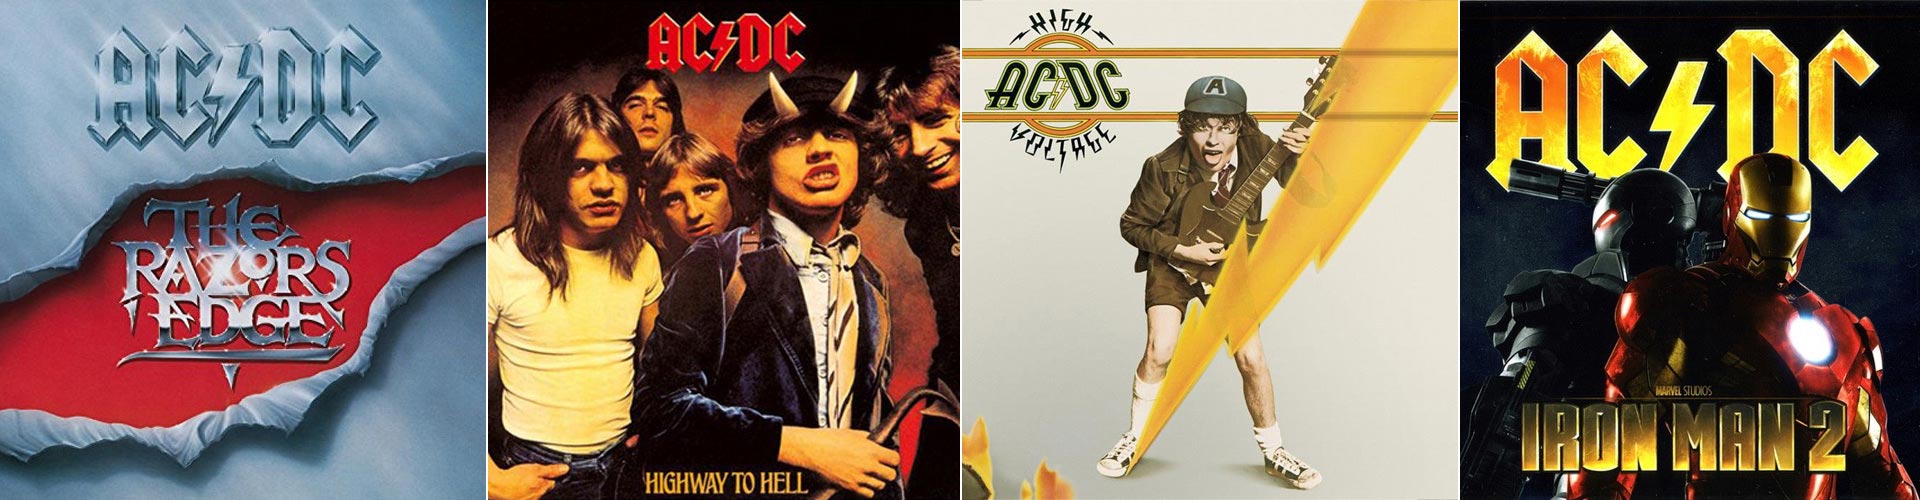 AC/DC vinylové desky